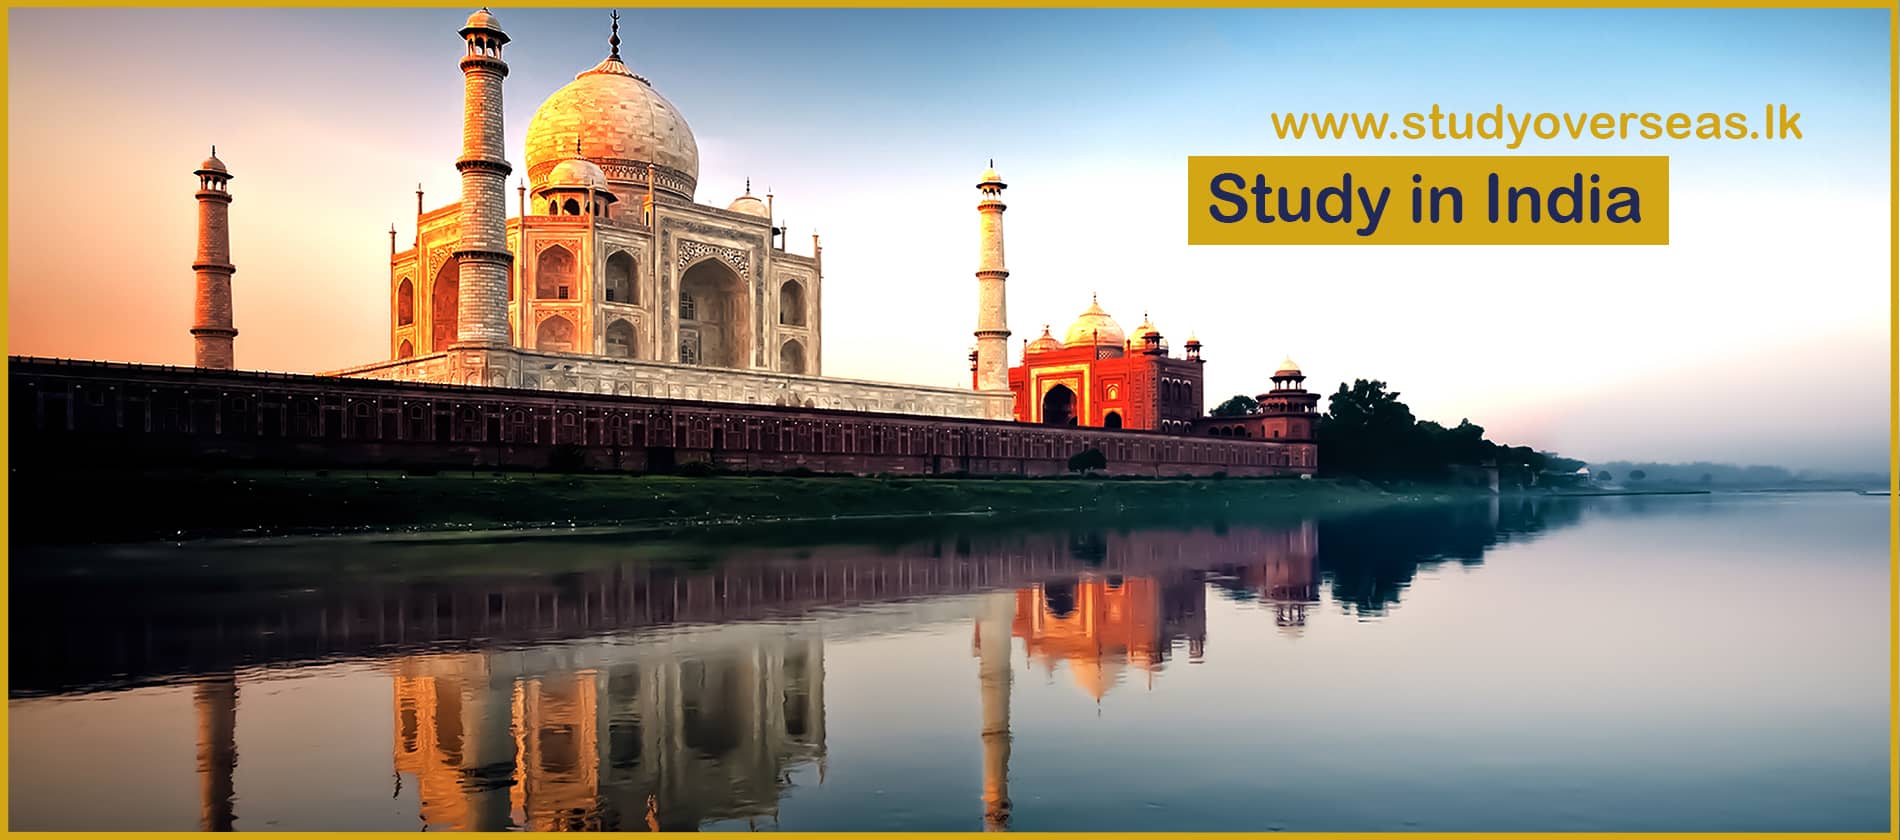 study_in_india_www.studyoverseas.lk